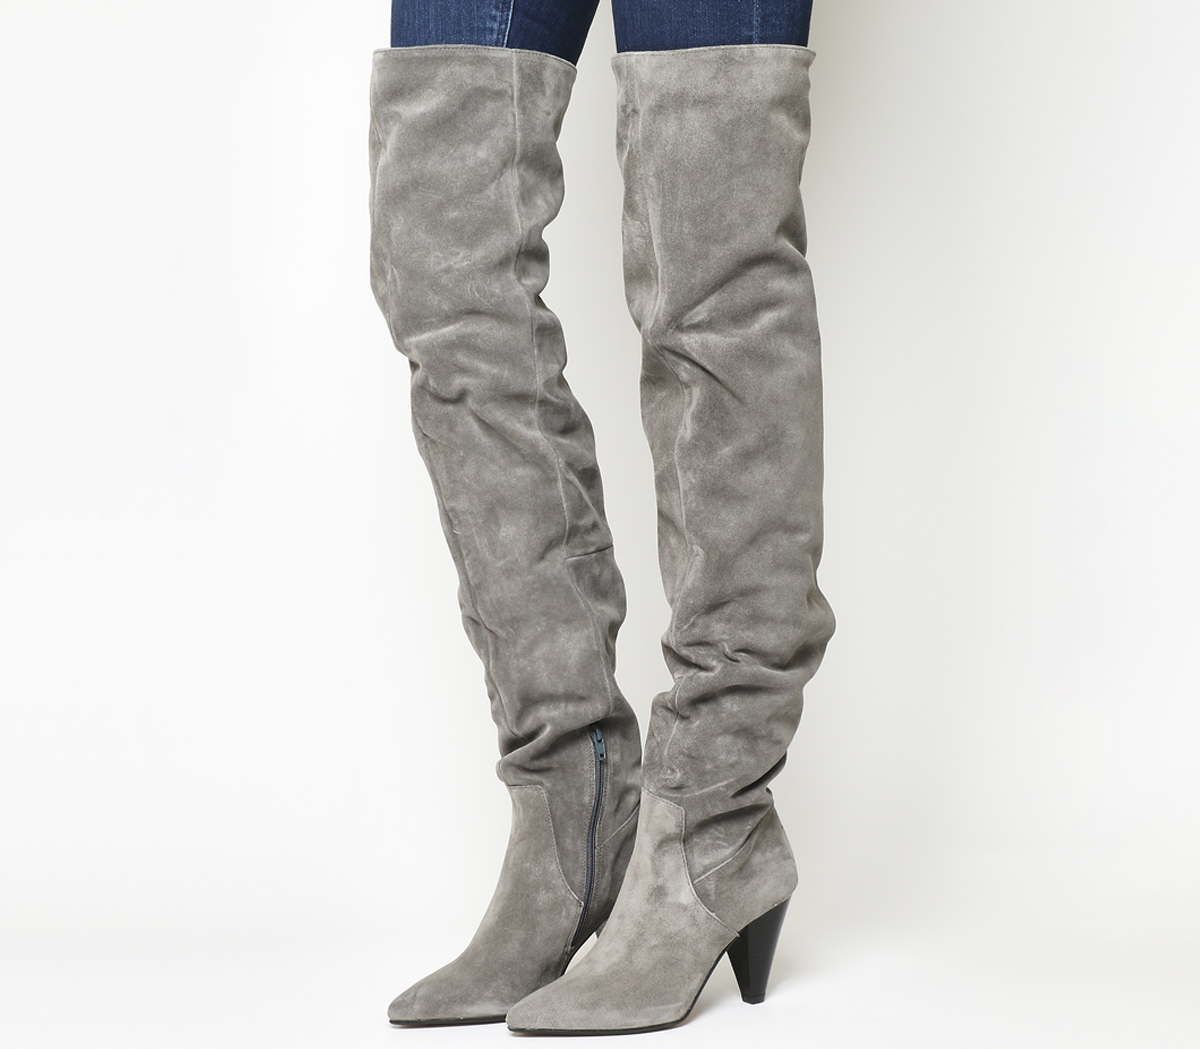 grey suede knee high boots